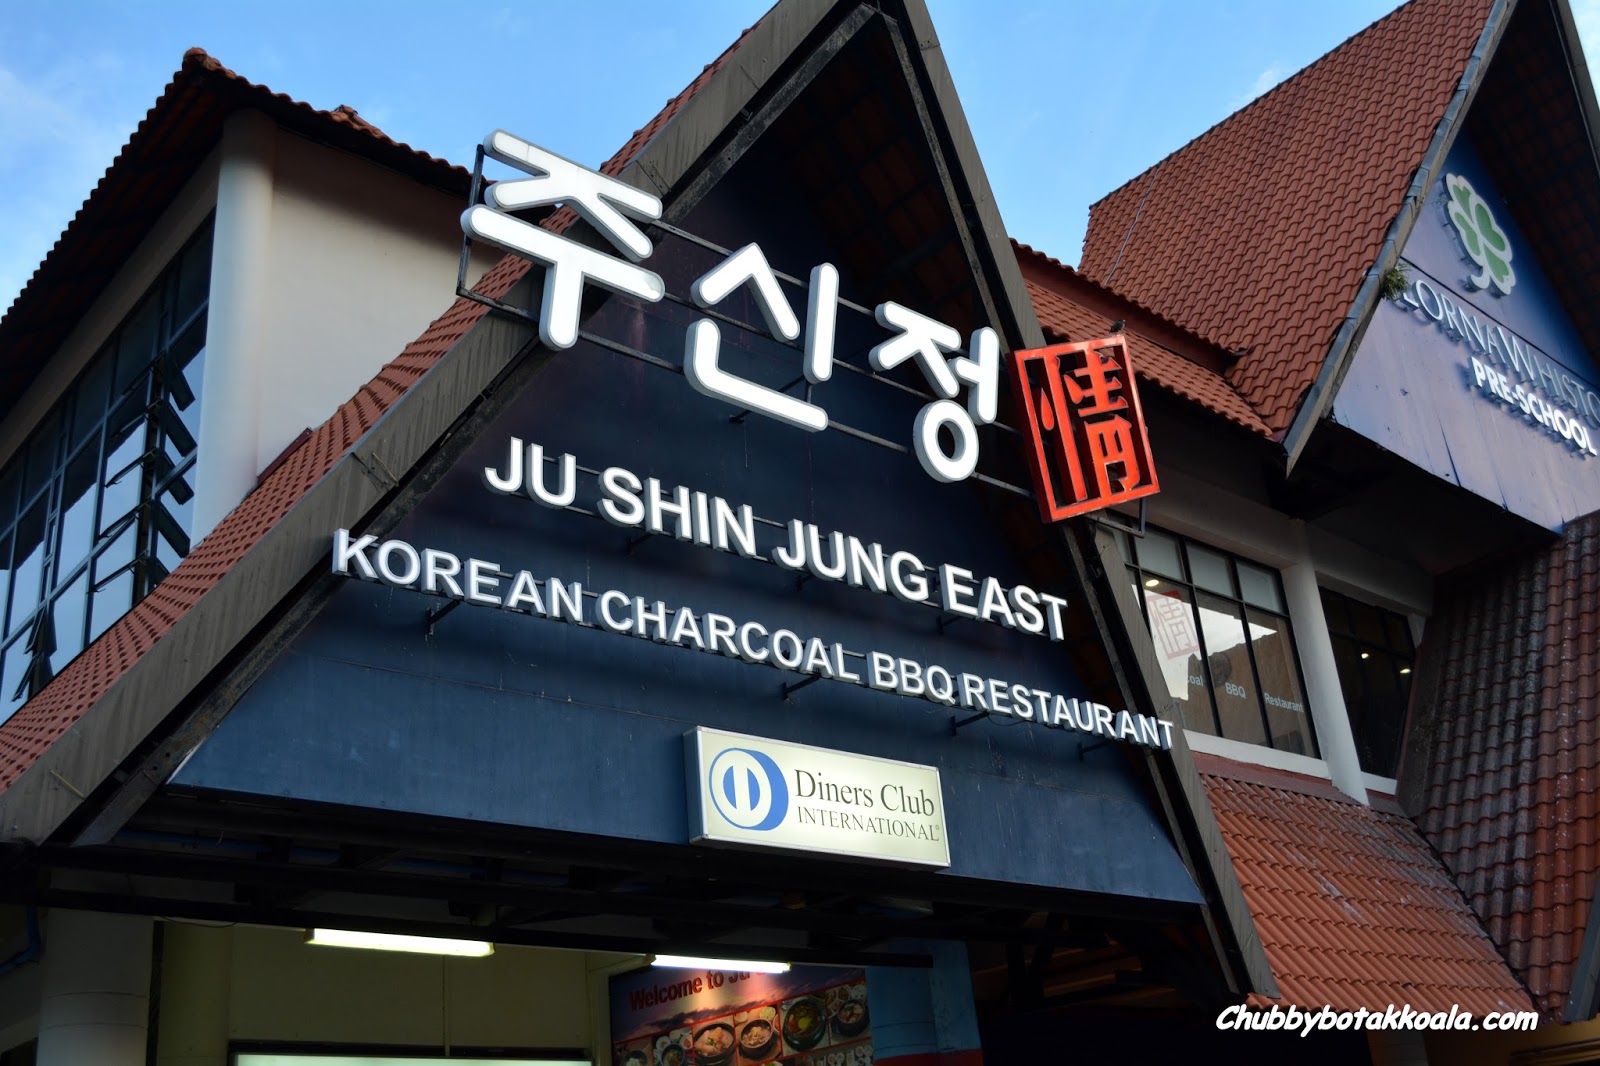 Chubby Botak Koala Singapore Food Blog Travel And Lifestyle Closed Ju Shin Jung East Unlimited Korean q